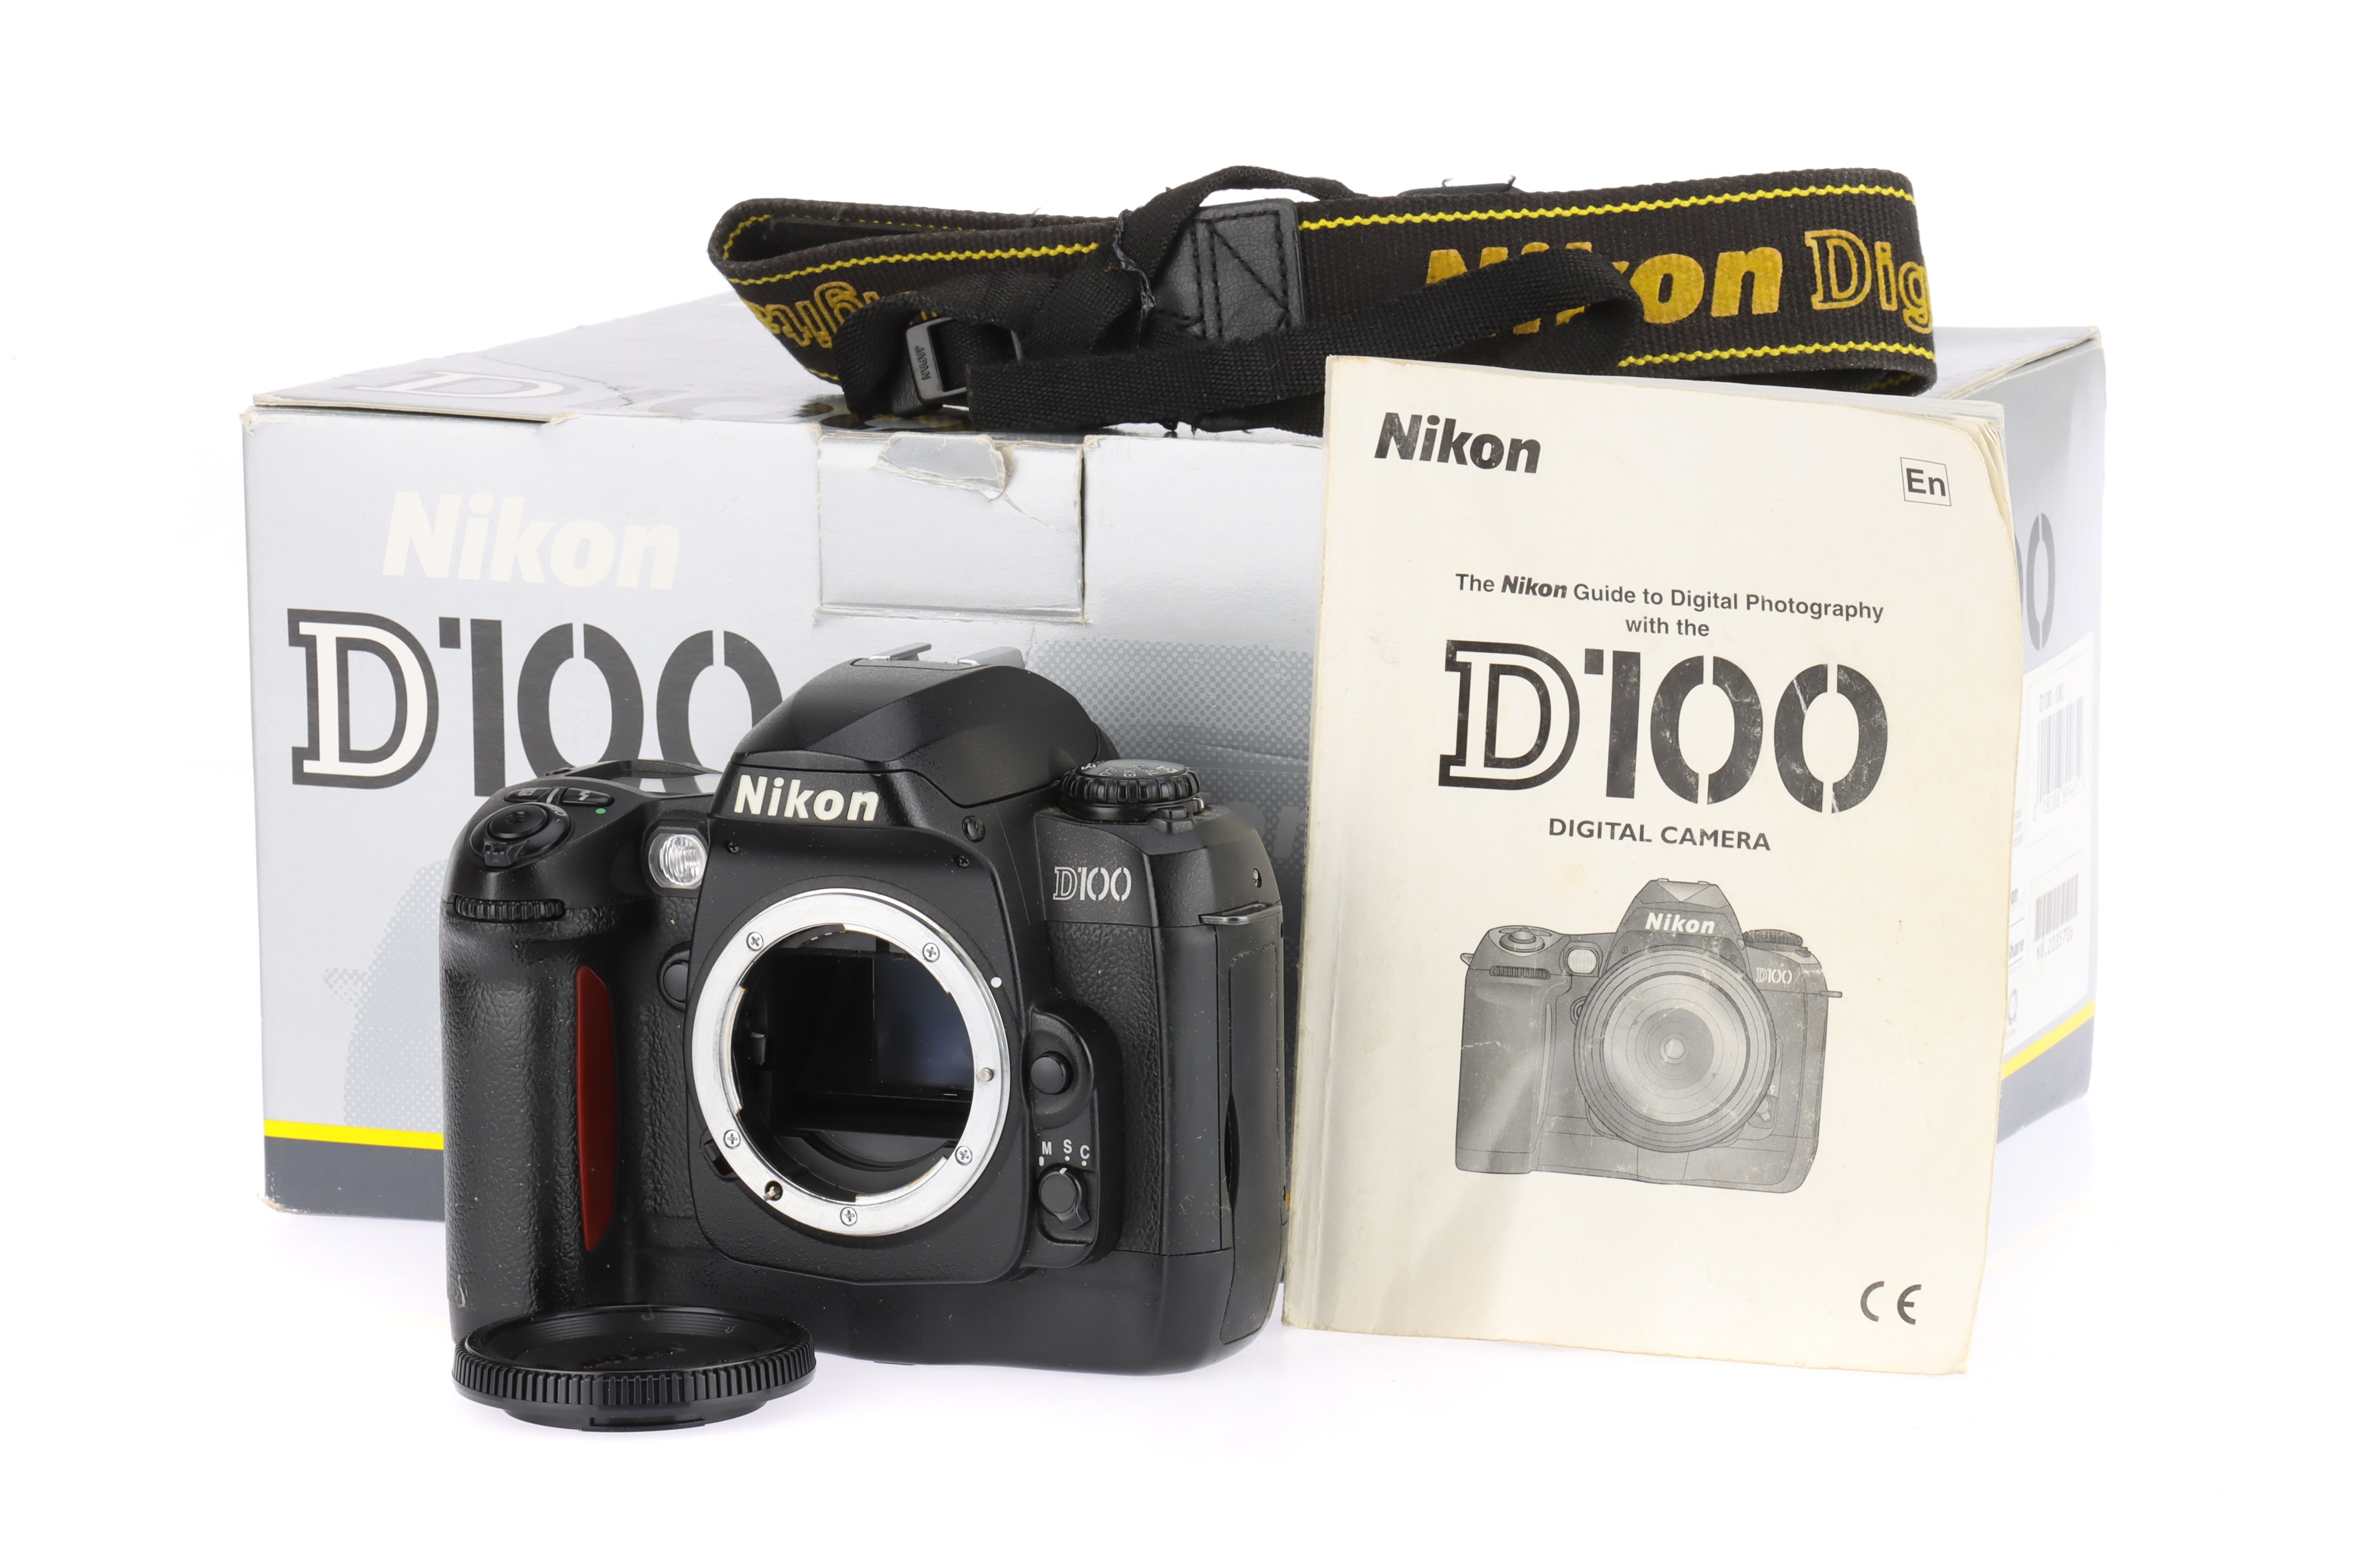 A Nikon D100 Digital SLR Camera Body,